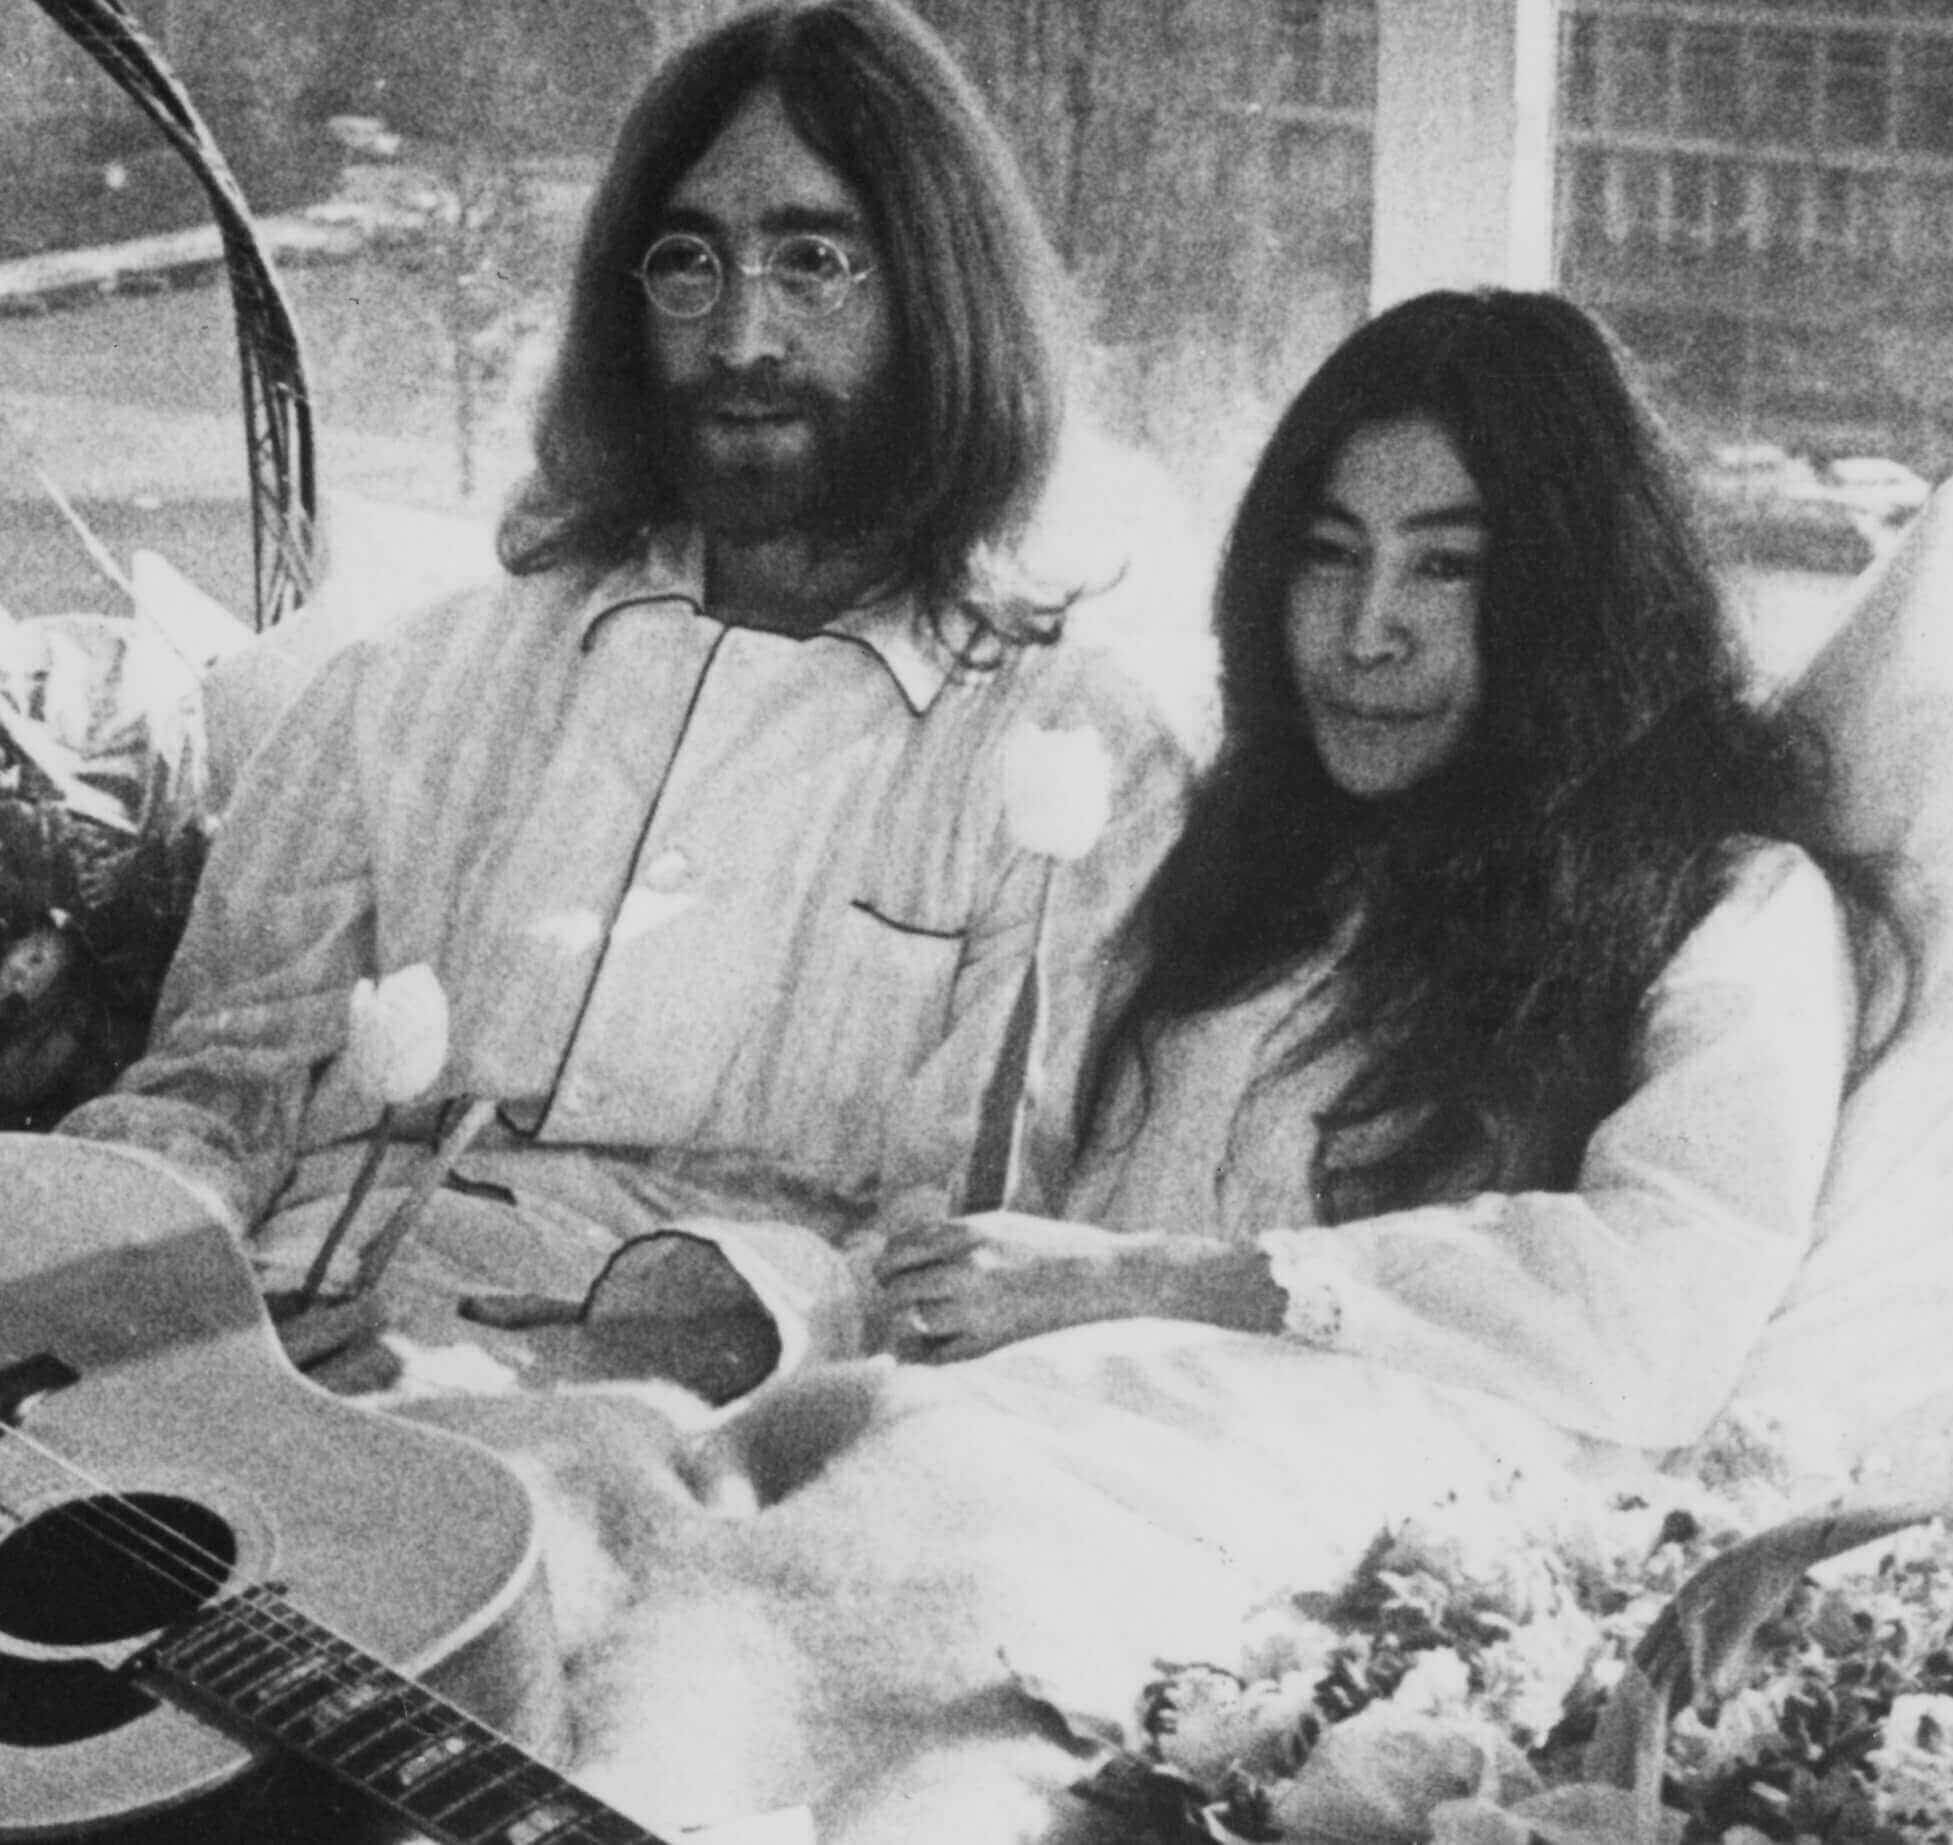 John Lennon and Yoko Ono in bed